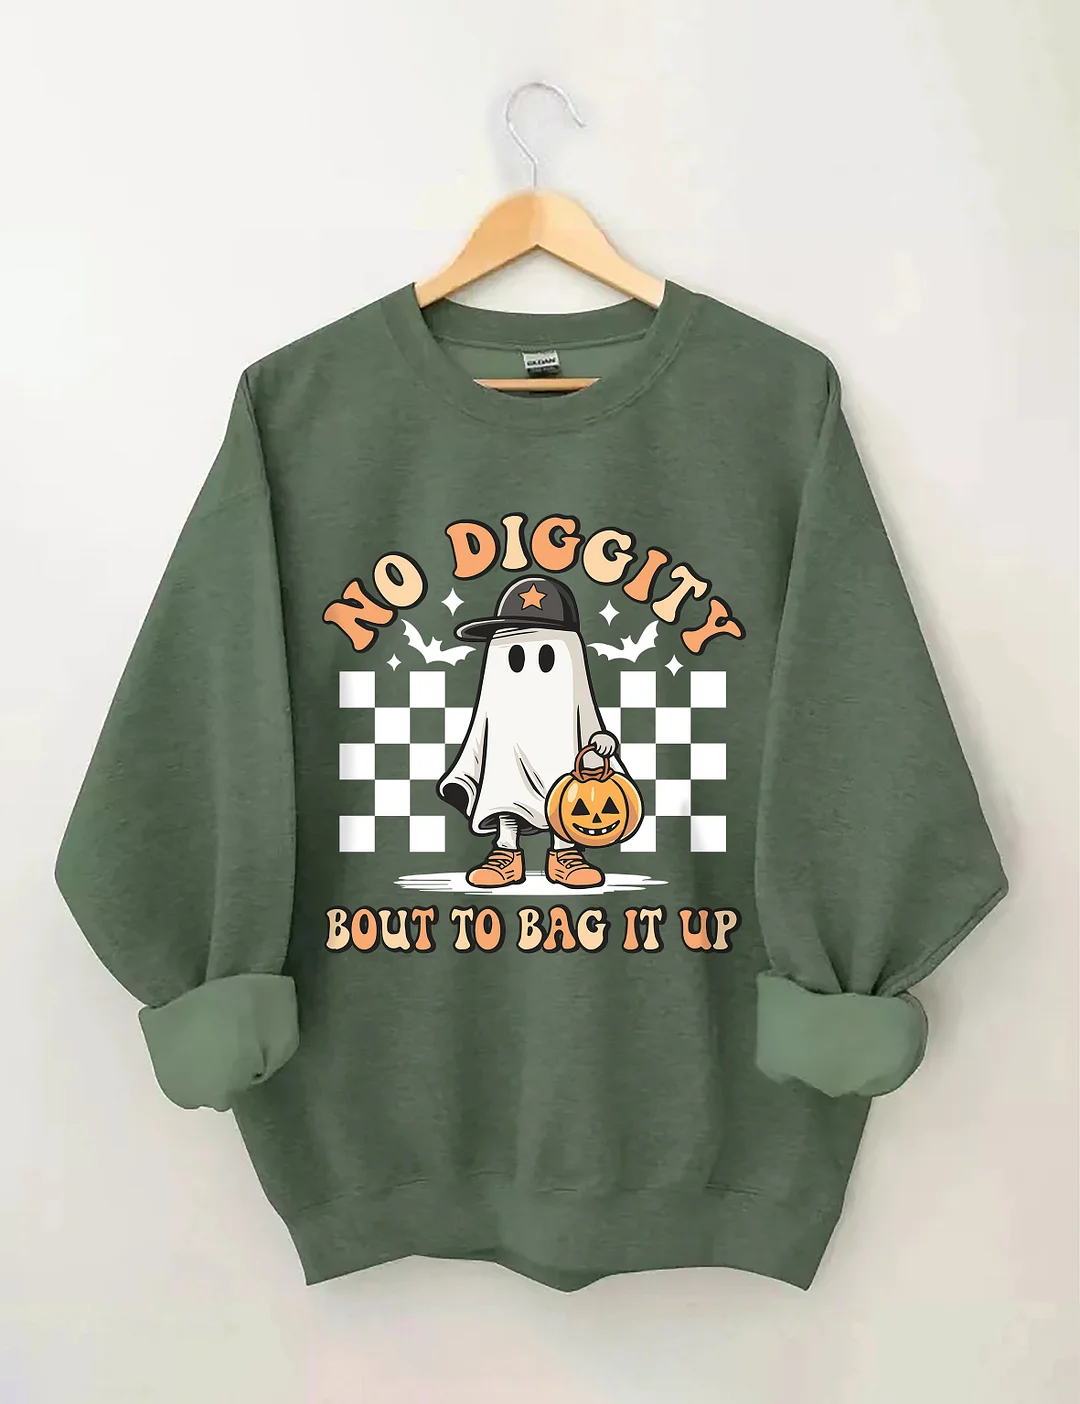 No Diggity Bout To Bag It Up Sweatshirt